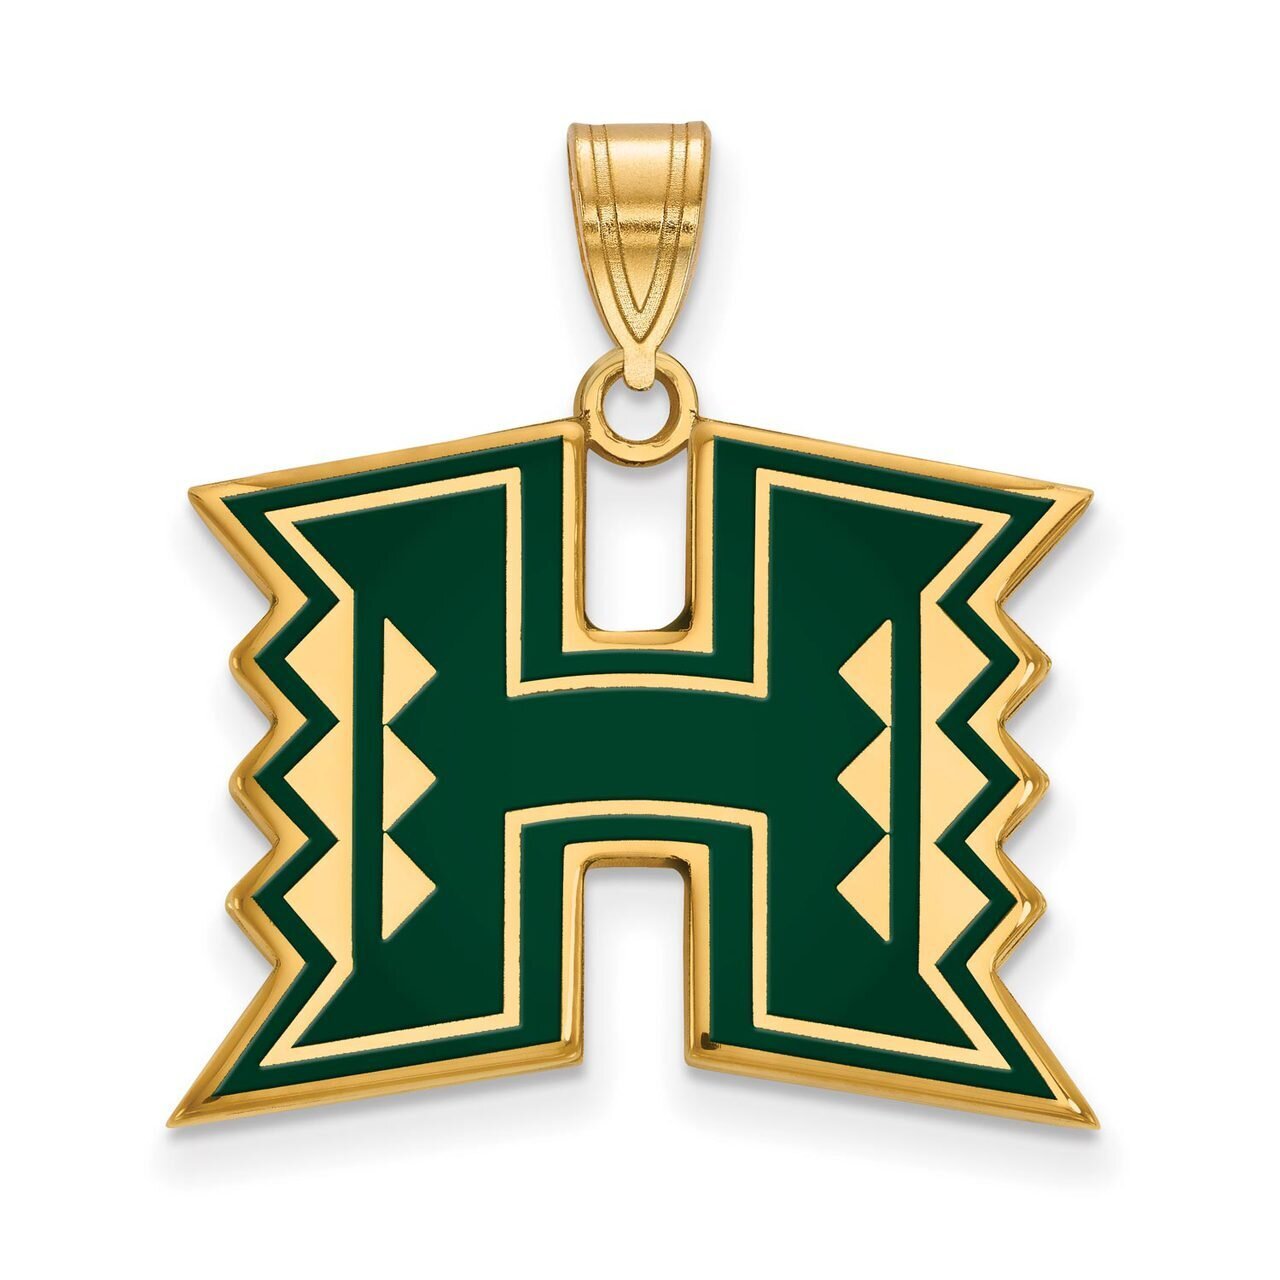 The University of Hawaii Large Enamel Pendant Gold-plated Silver GP021UHI